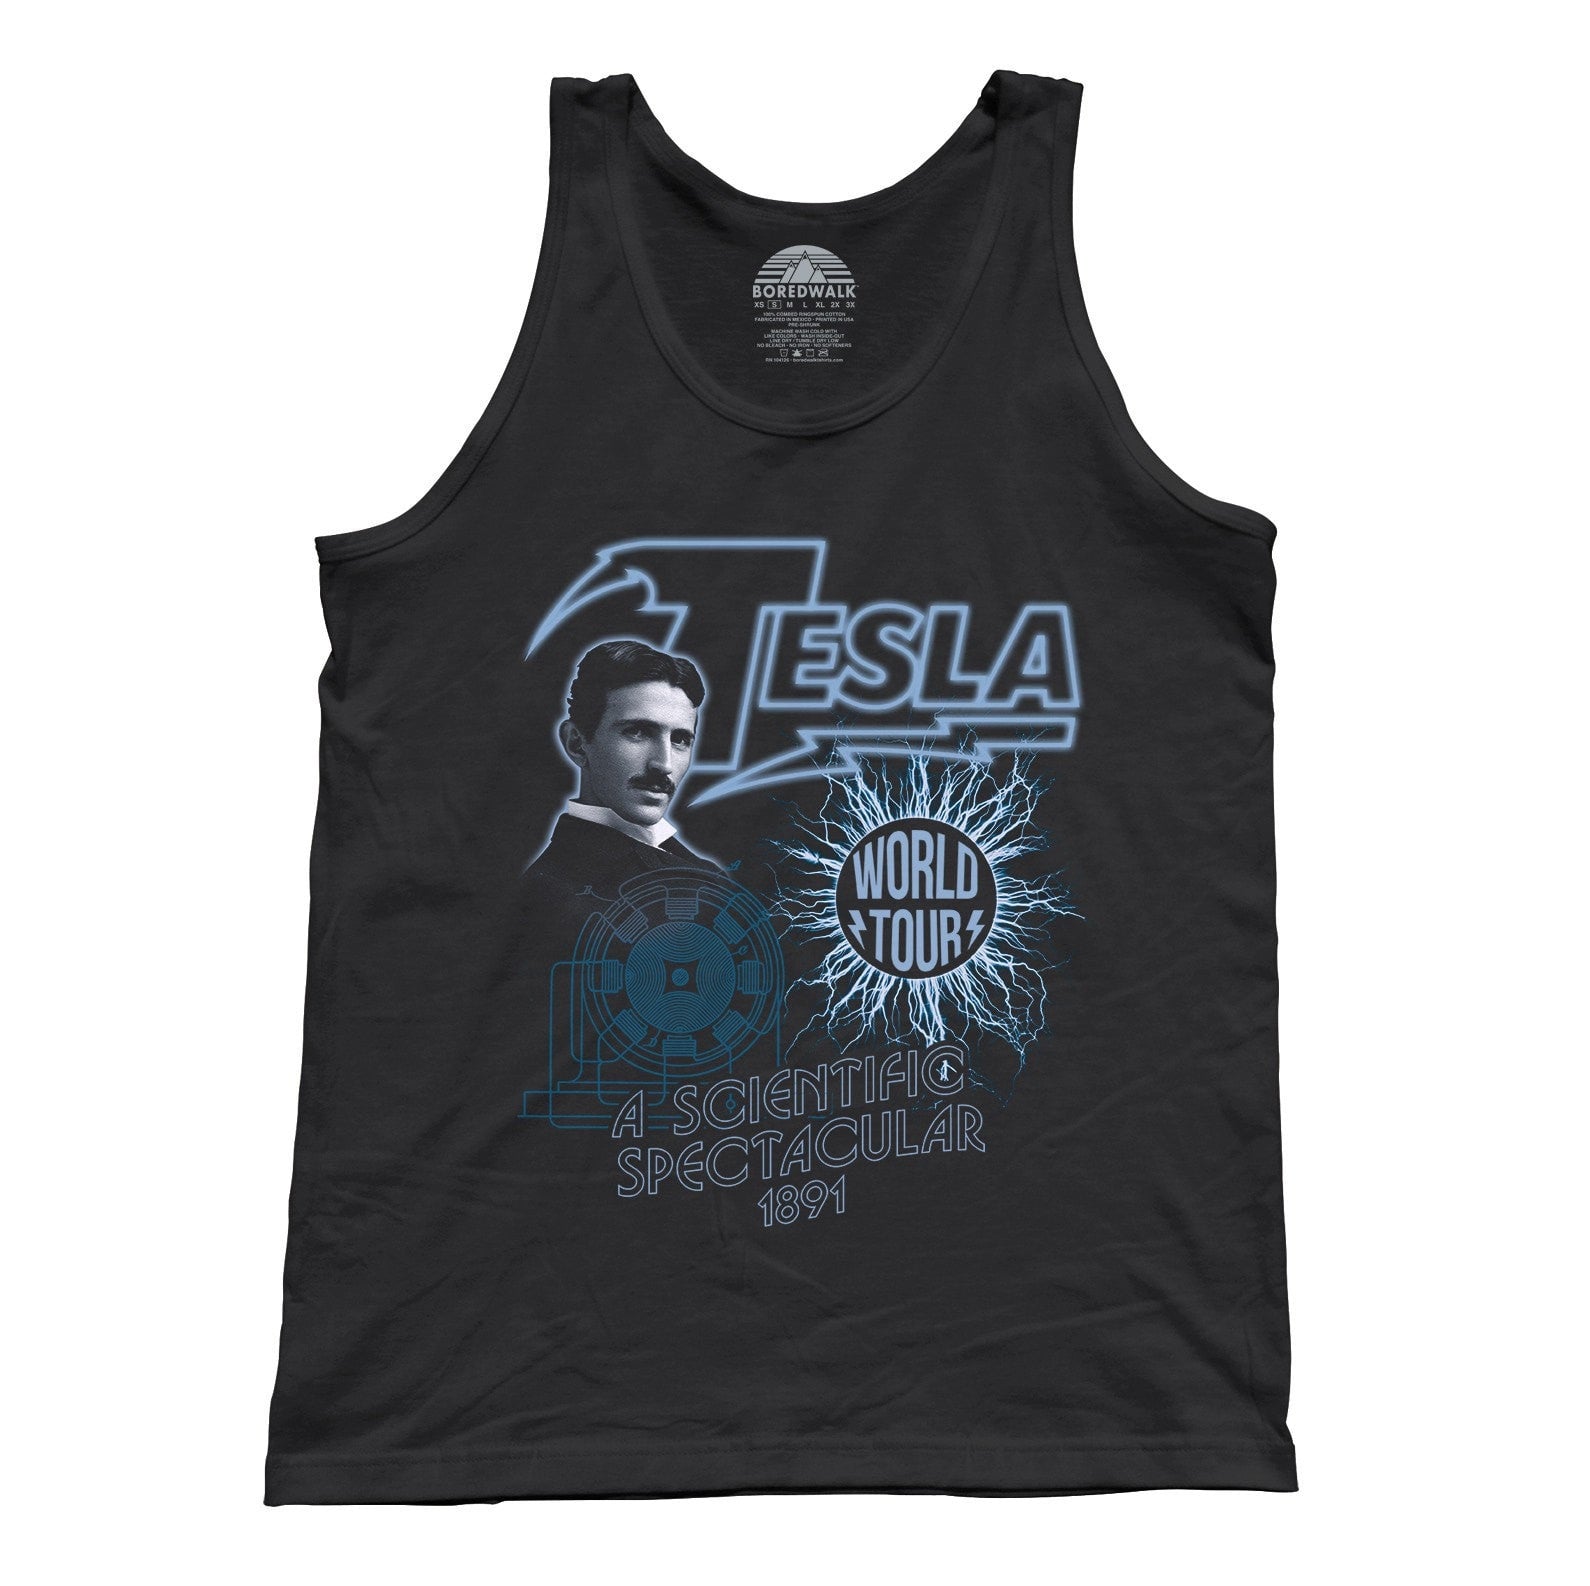 Unisex Nikola Tesla World Tour Tank Top - Geeky Cool Science